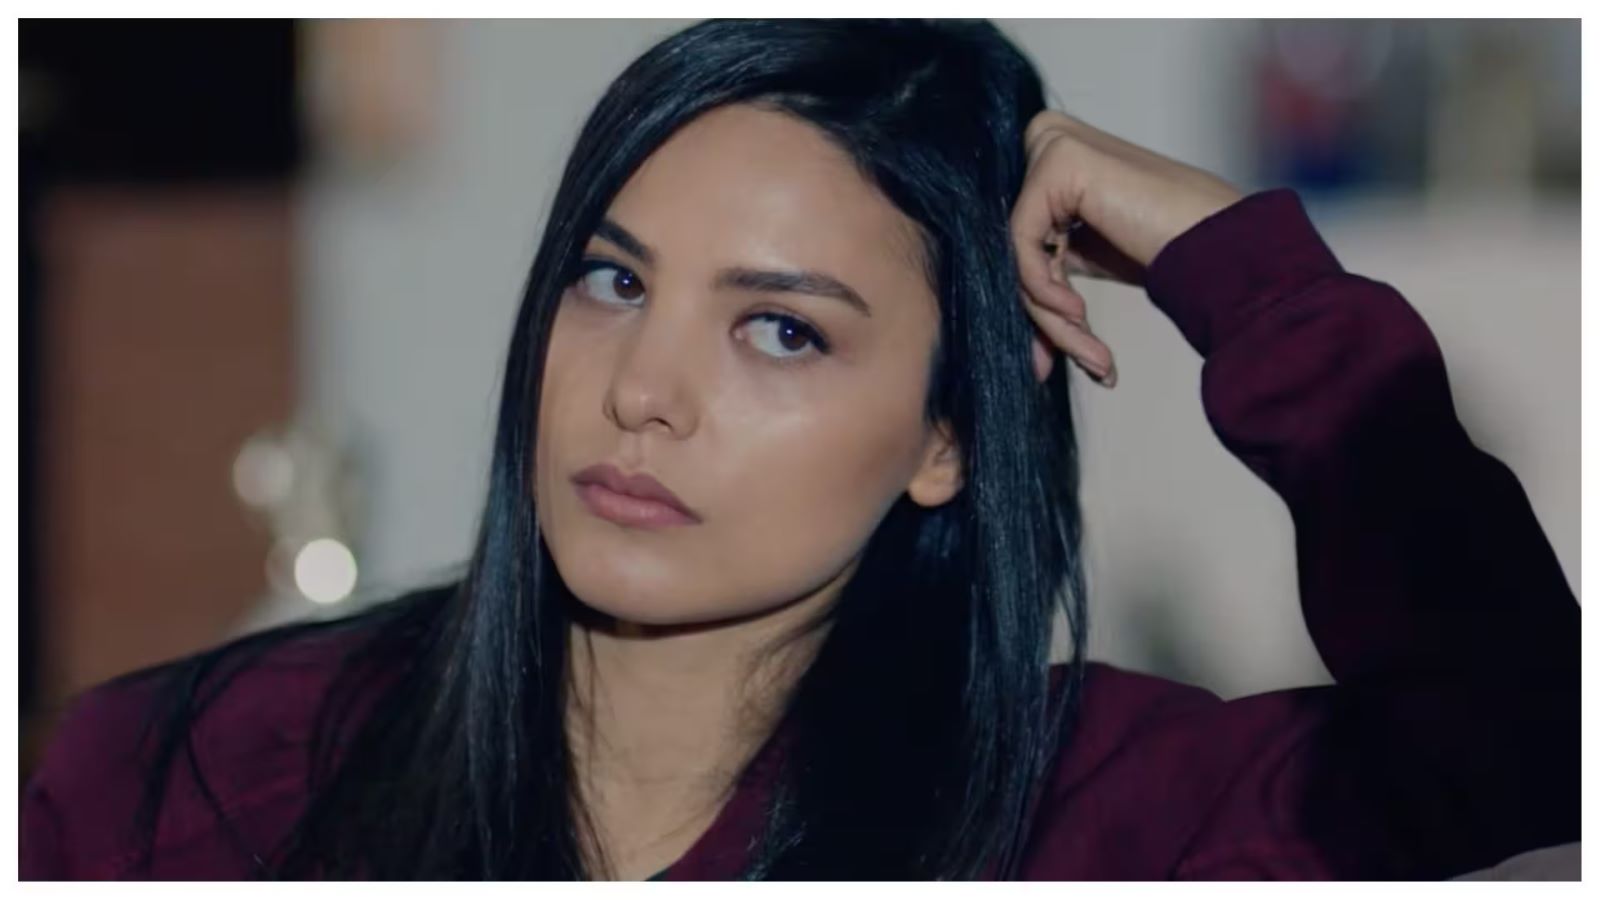 Nella foto Zeynep interpretata da Hazal Filiz Küçükköse